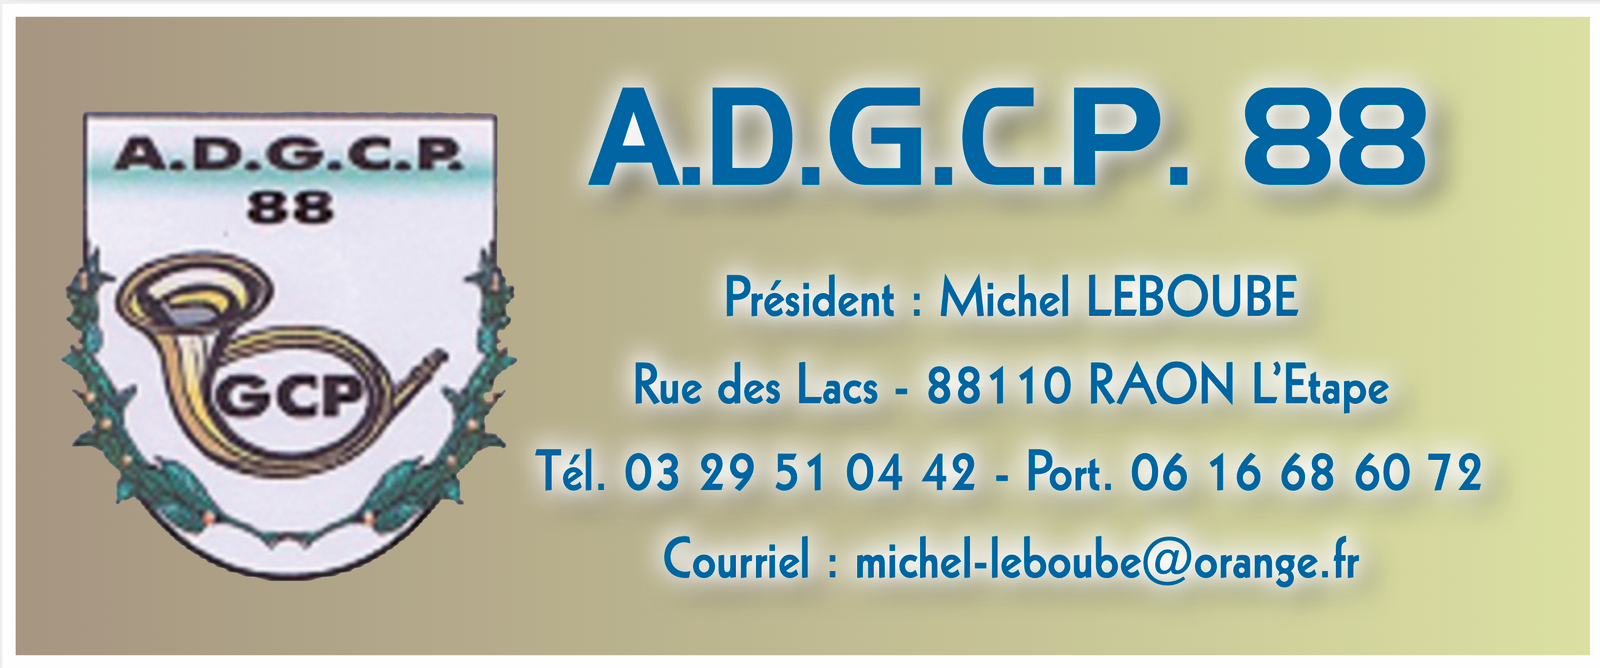 ADGCP 88